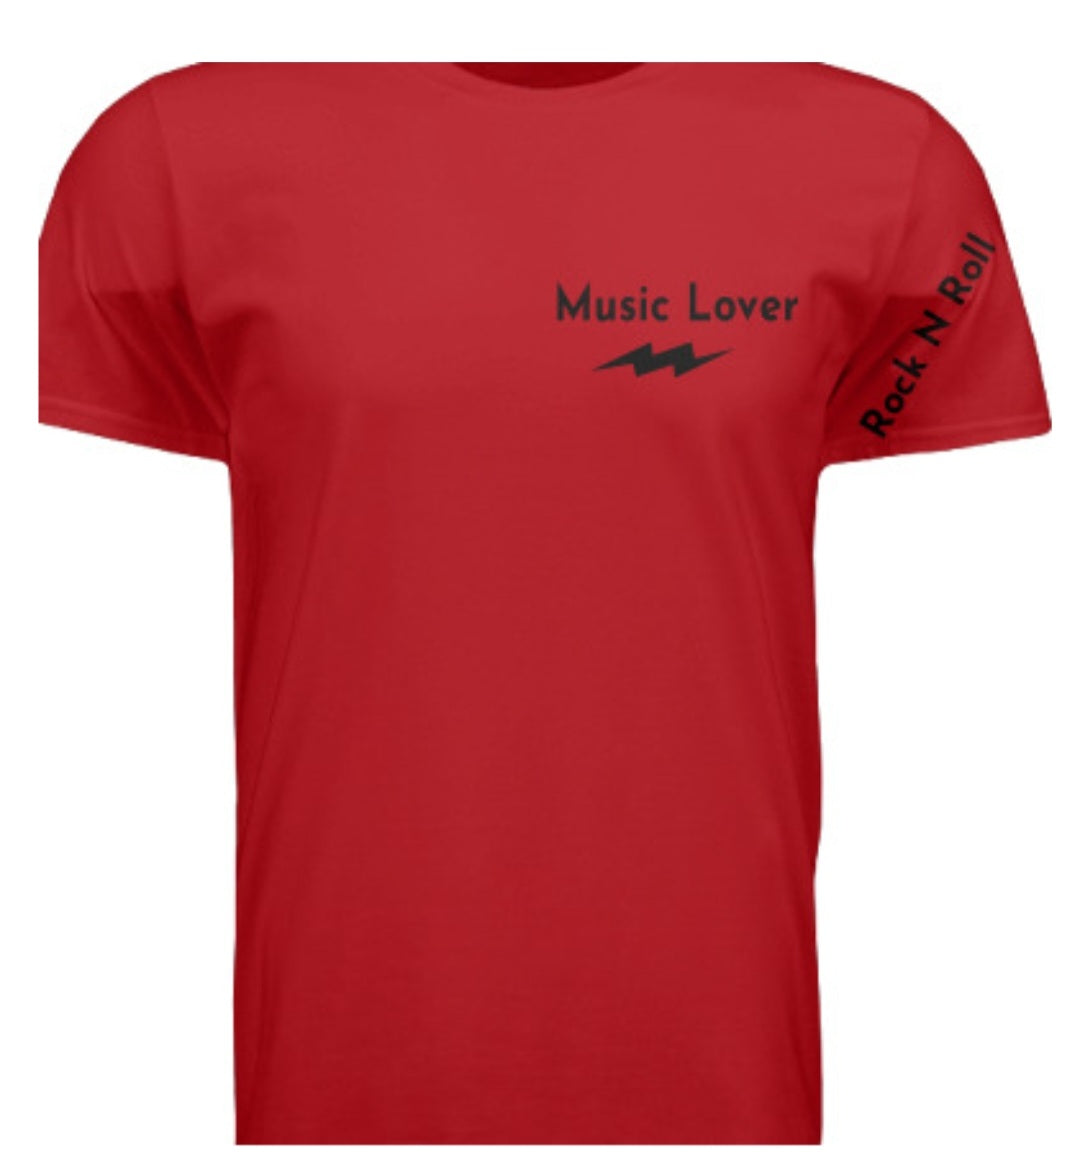 Short Sleeve Rock N Roll (Pocket Music Lover) Crewneck T-shirt